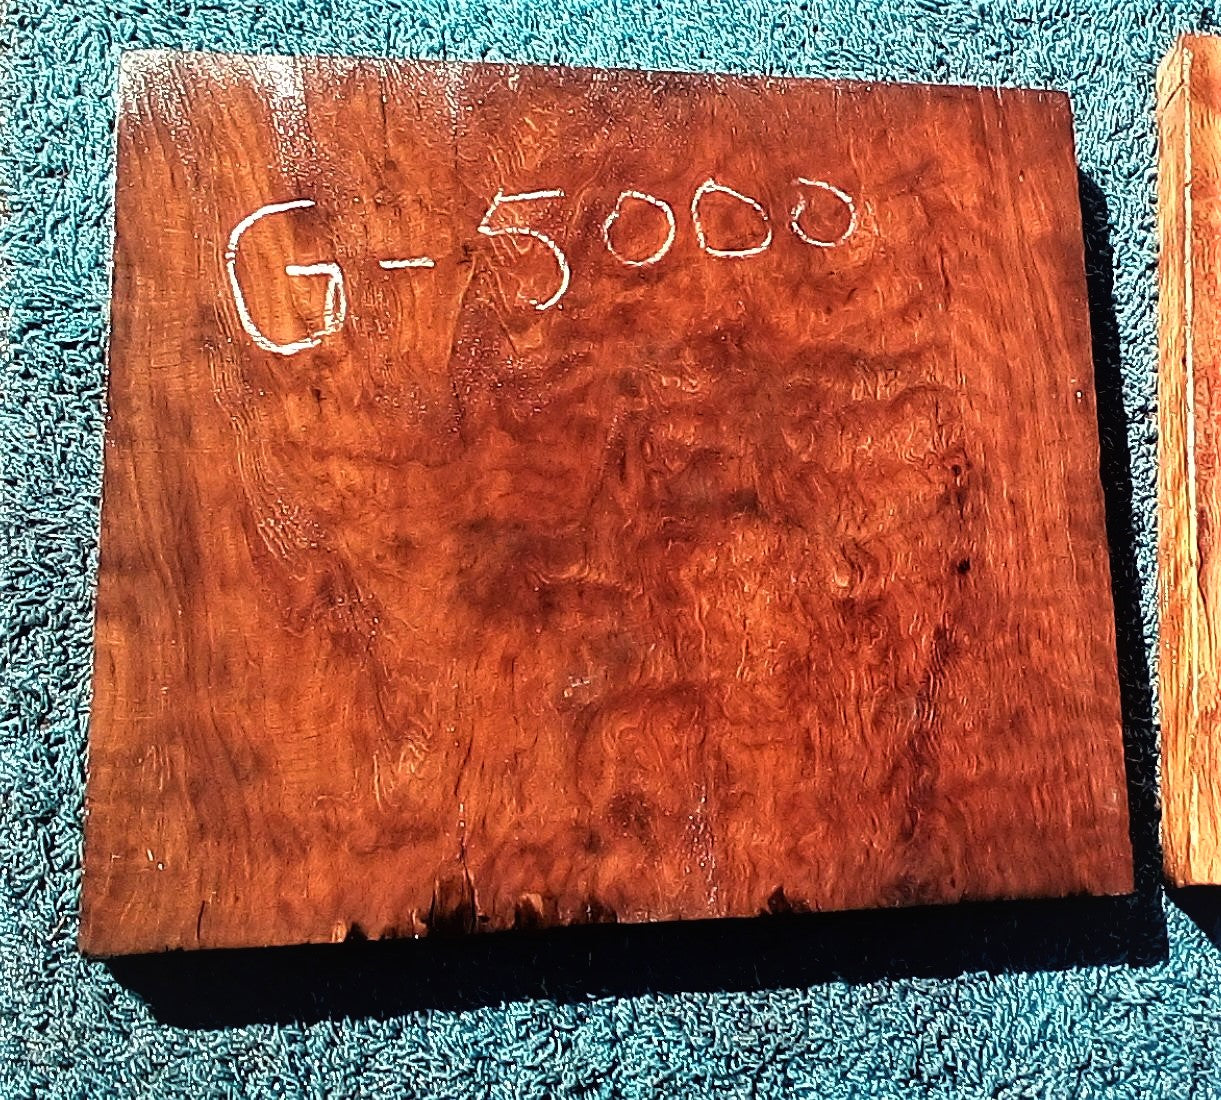 quilted redwood | guitar billet | wood turning | DIY crafts | gz5000